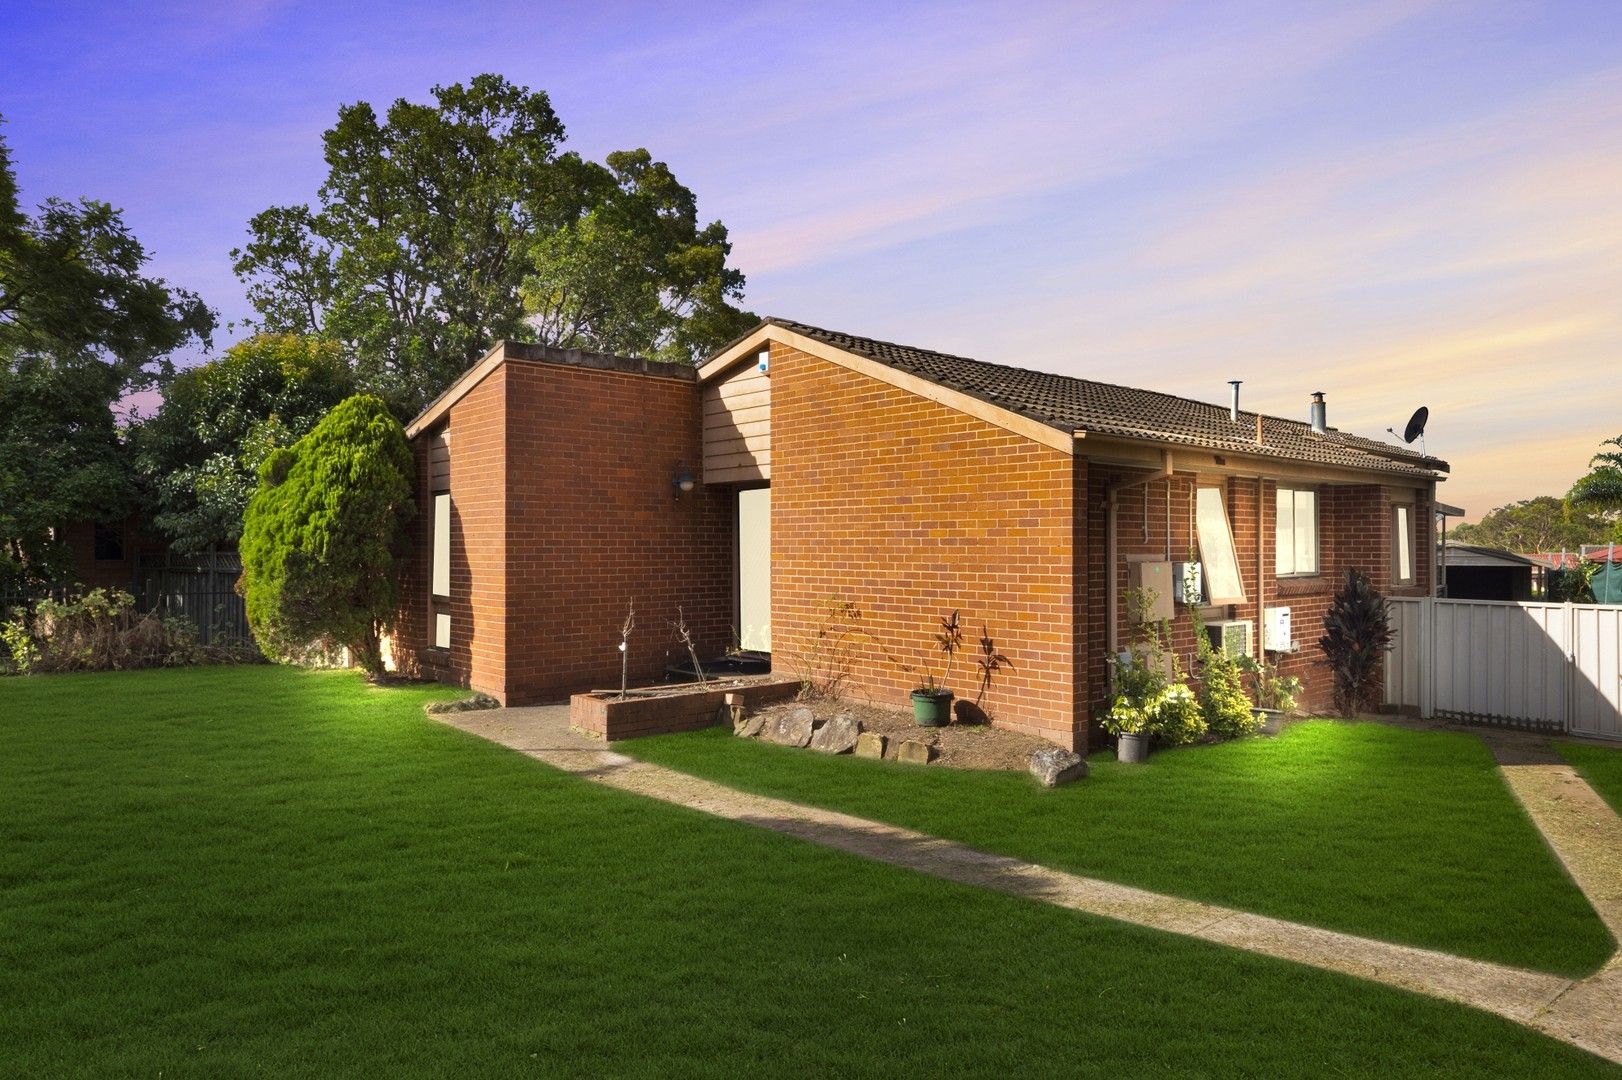 5 bedrooms House in 40 Eucalyptus Drive MACQUARIE FIELDS NSW, 2564